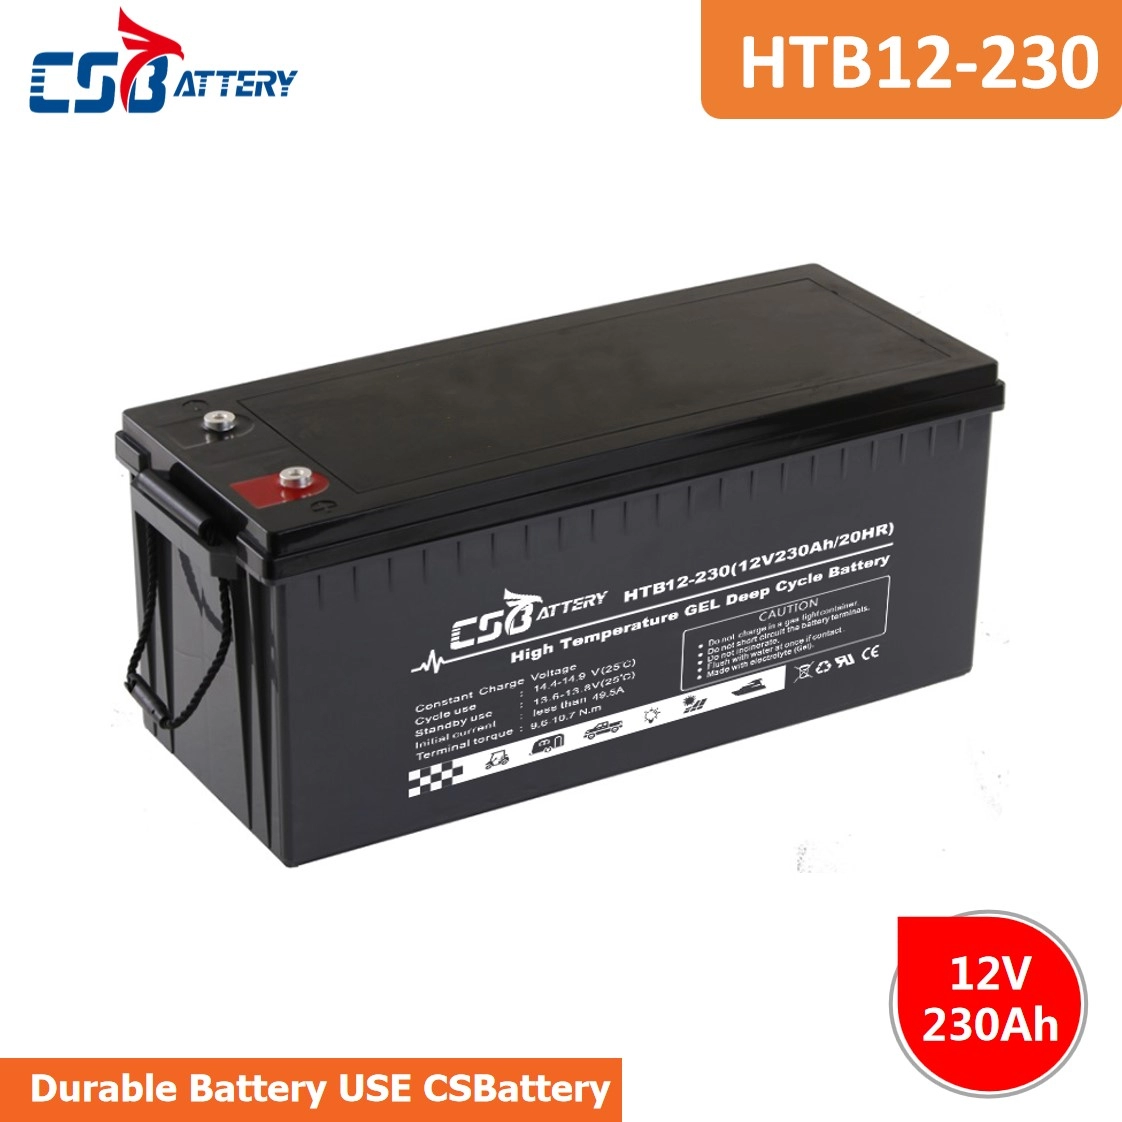 HTB12-230 12V 230AH High-Temp Deep Cycle Batteries